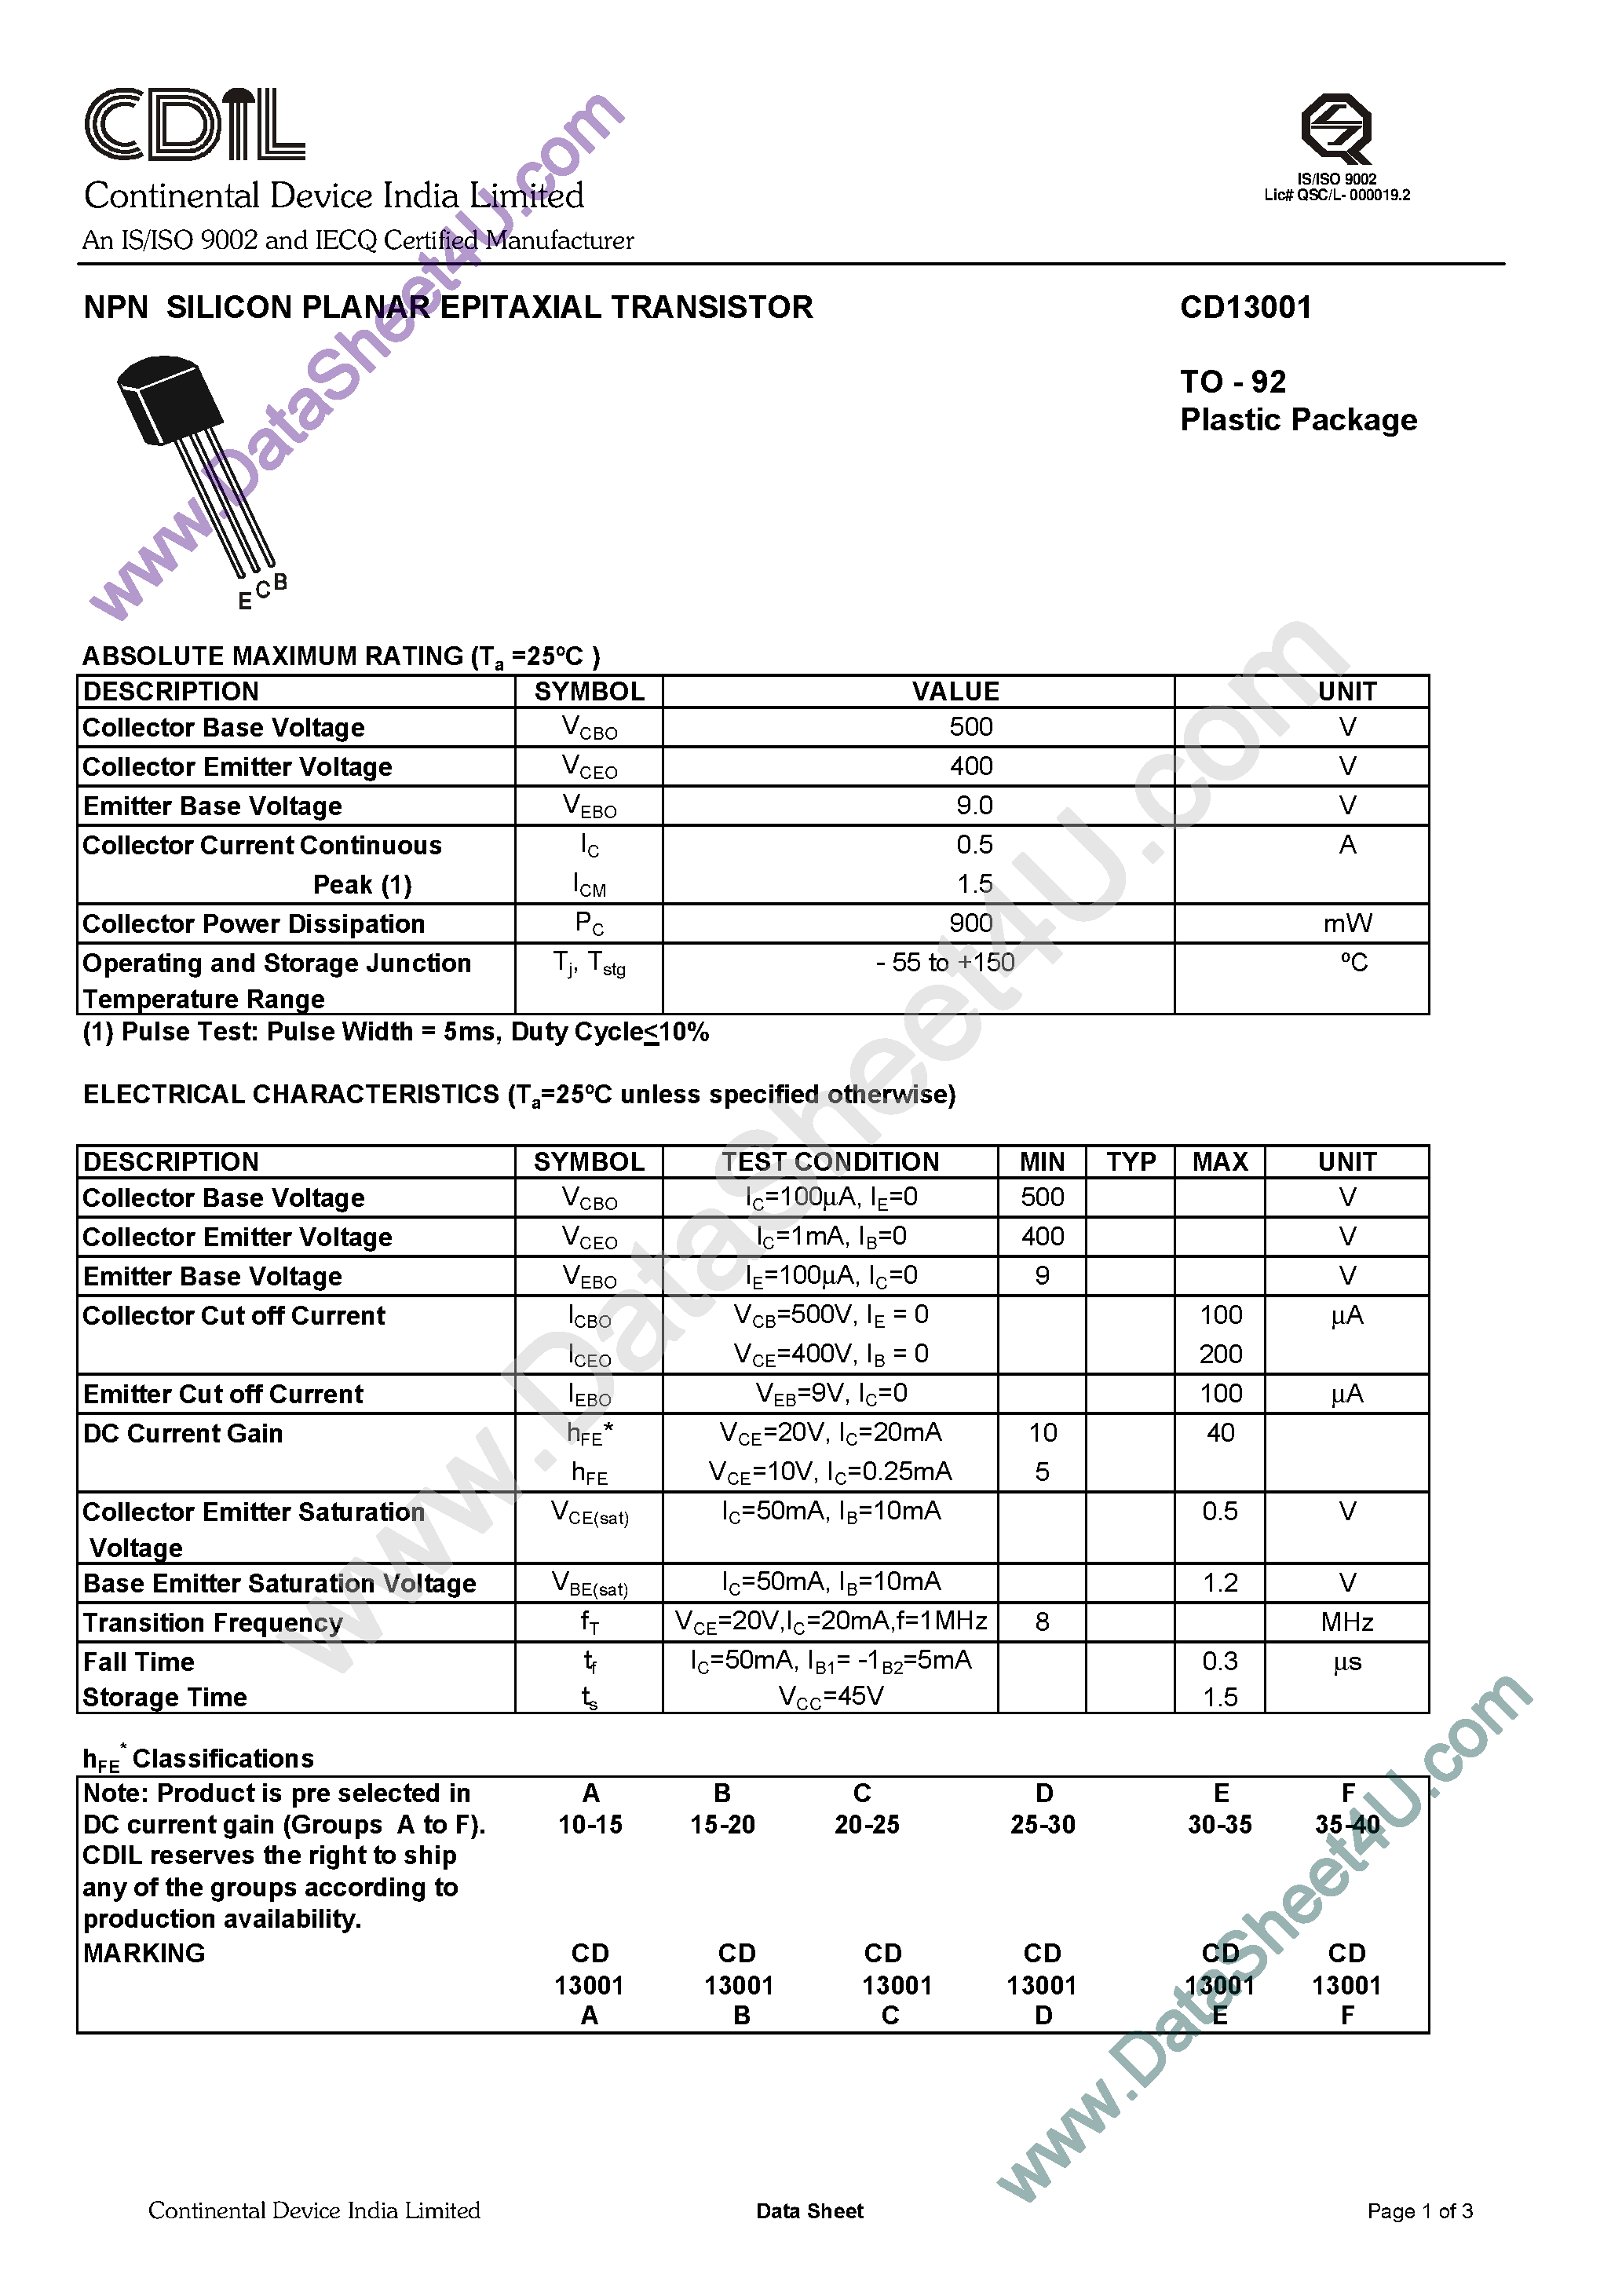 Datasheet CD13001 - NPN SILICON PLANAR EPITAXIAL TRANSISTOR page 1